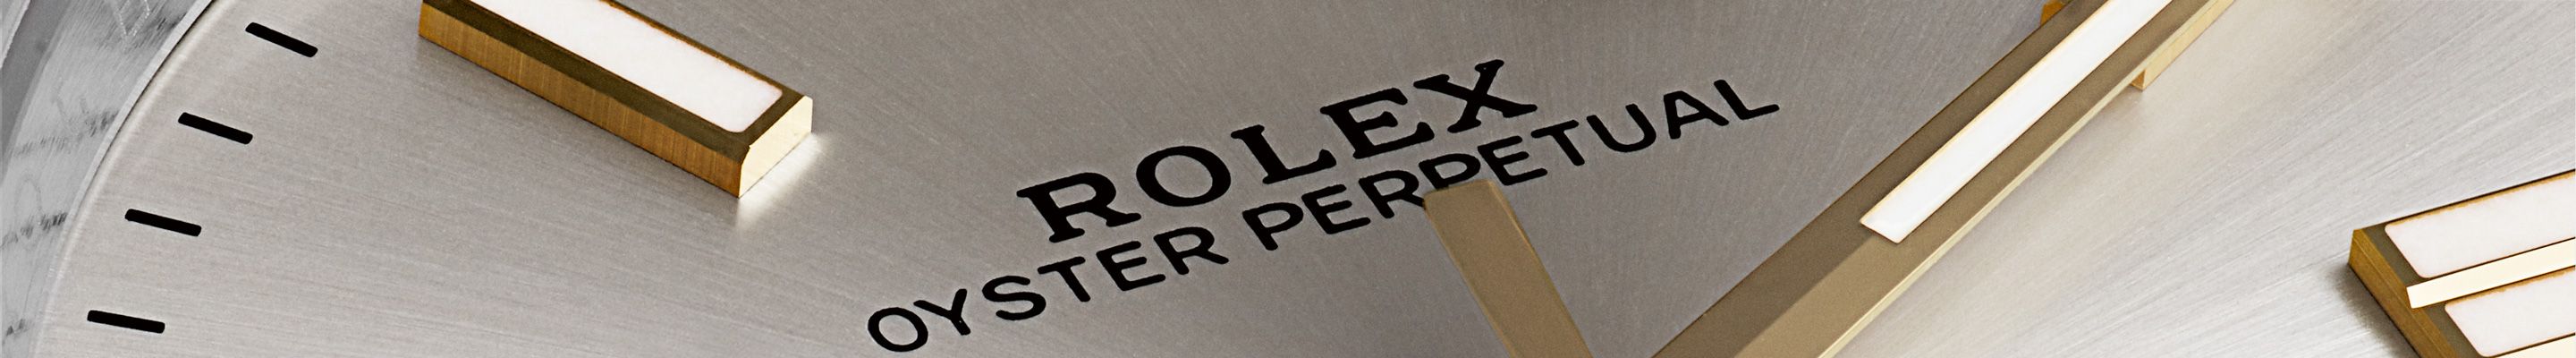 Rolex Oyster Perpetual - Quintessenz der Oyster